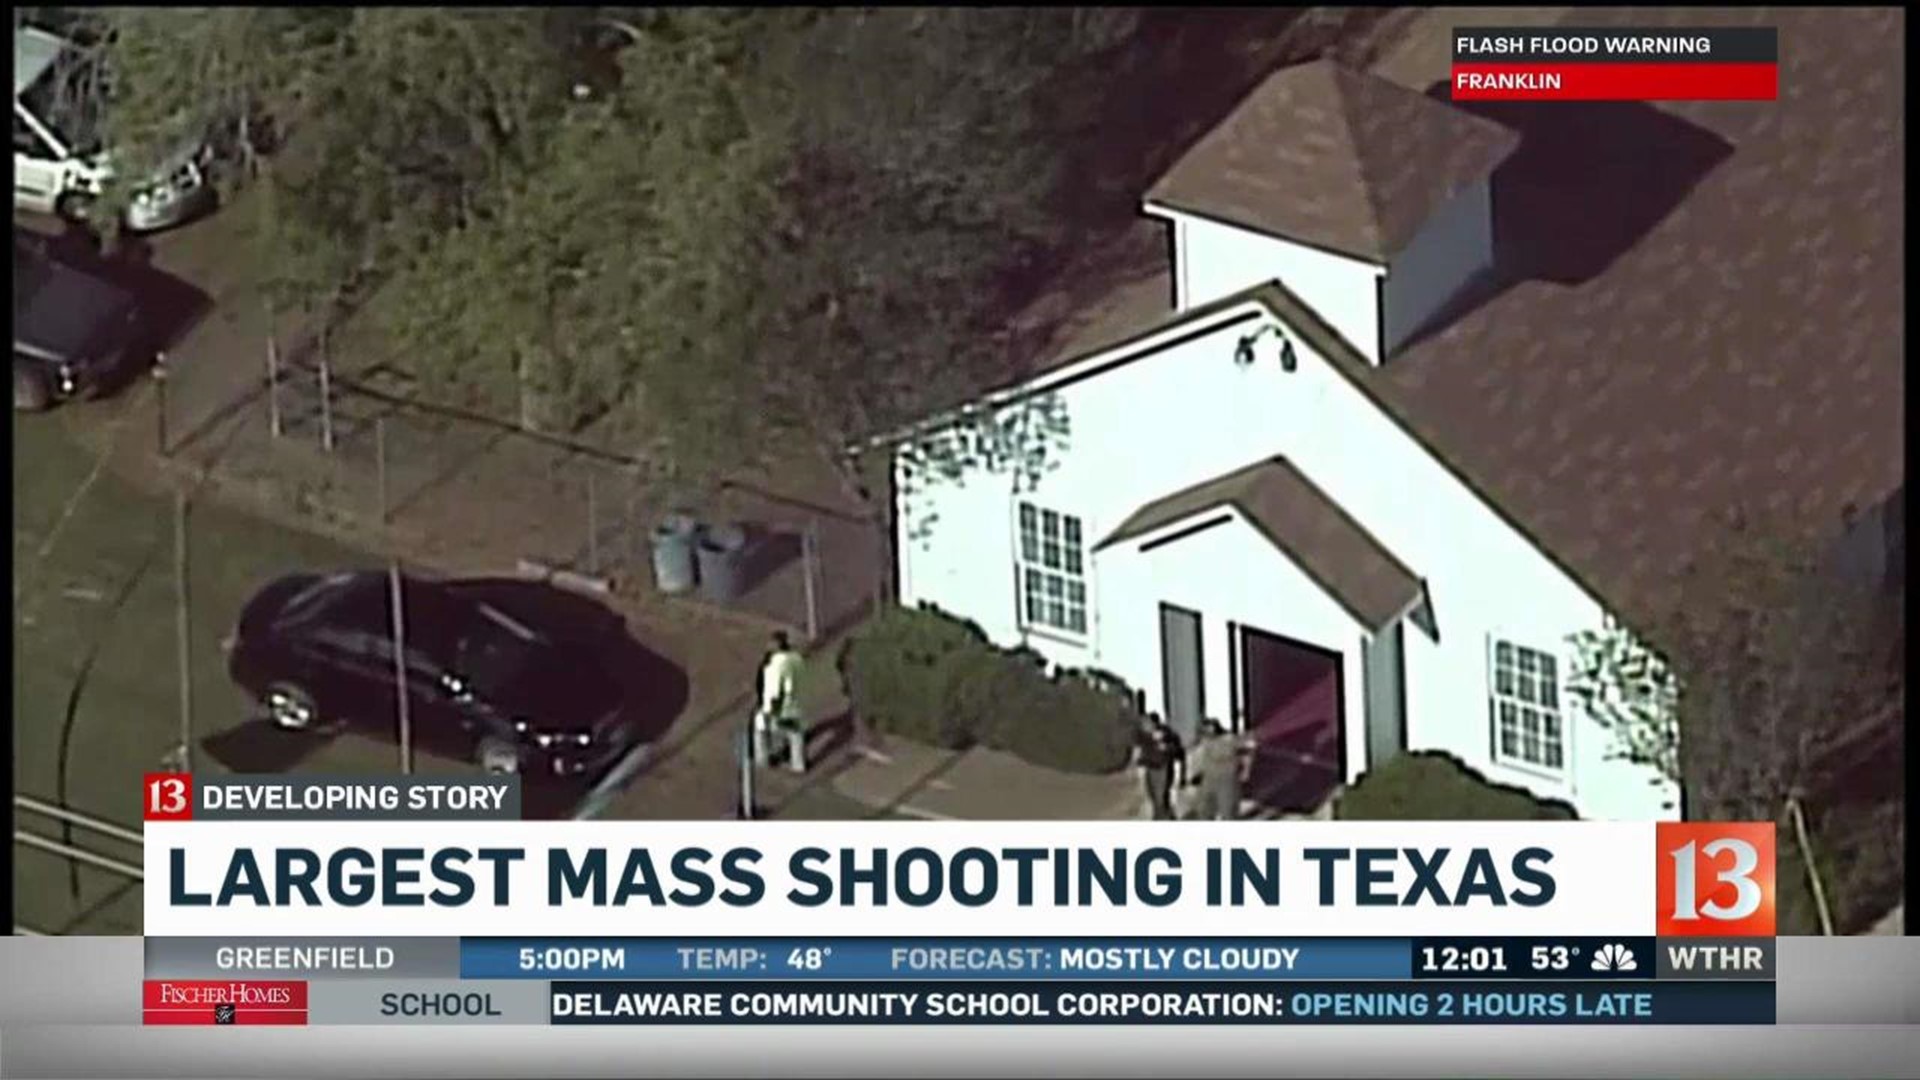 26 killed in shooting at Texas church